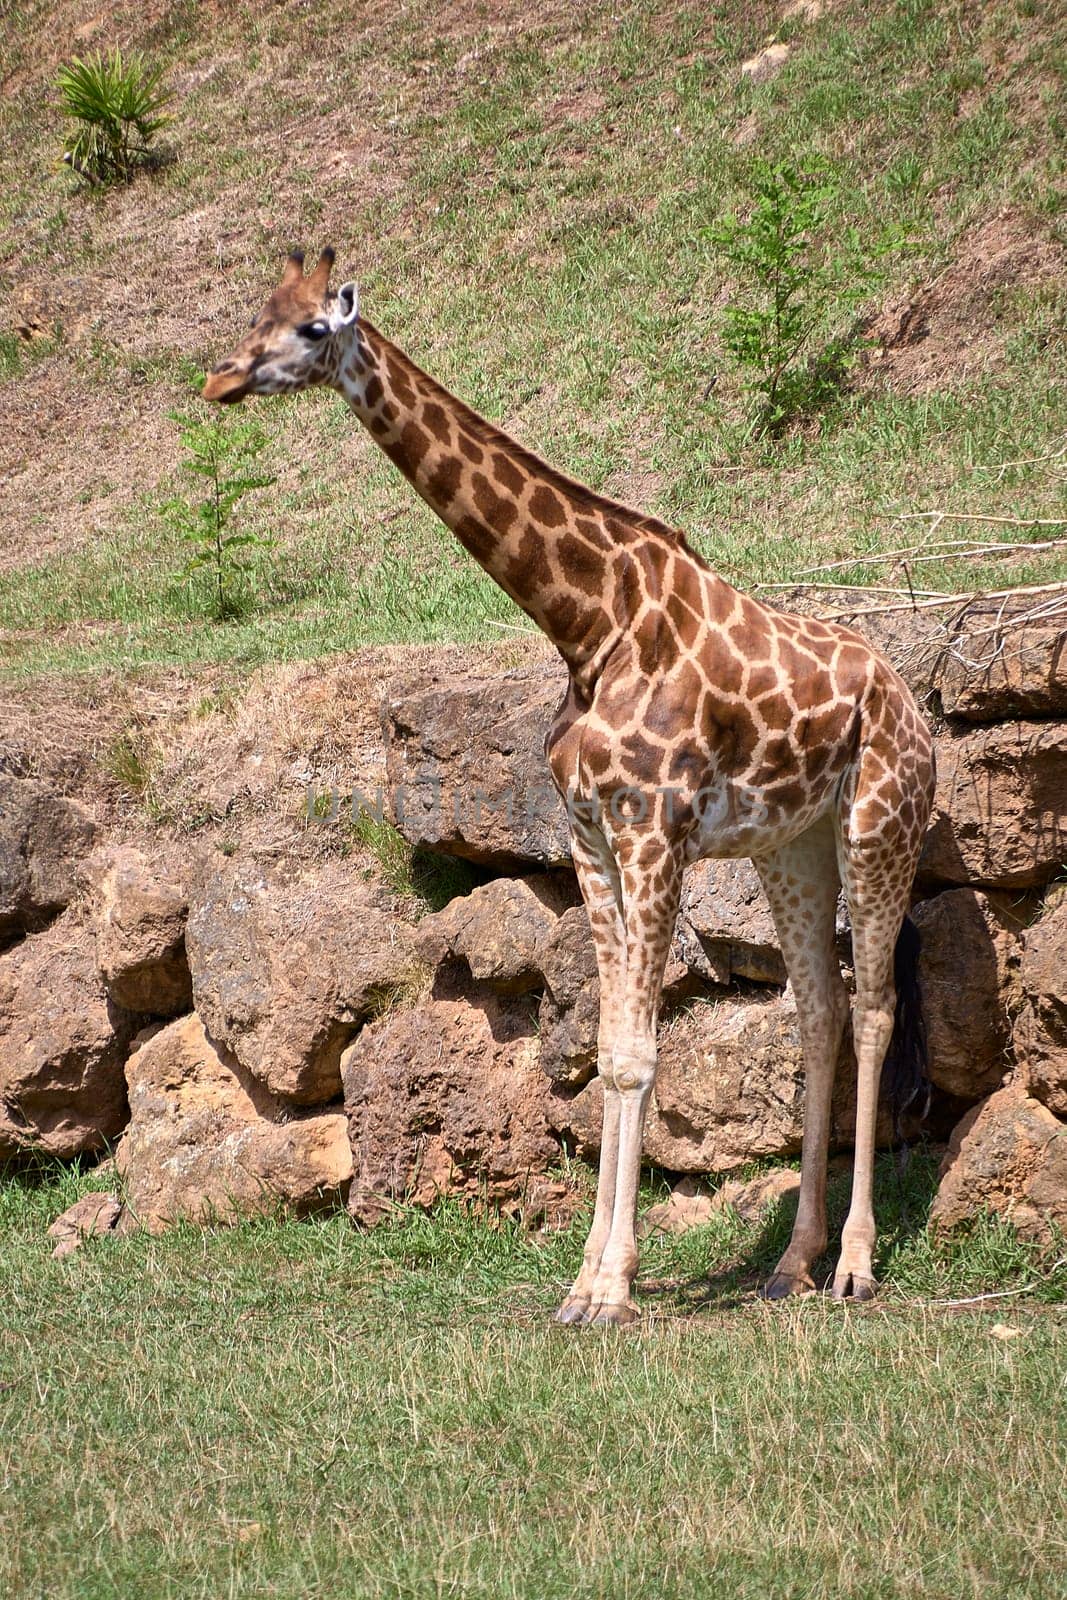 A lone giraffe leaning on large rocks. Vegetal, green, turtleneck, unmanned